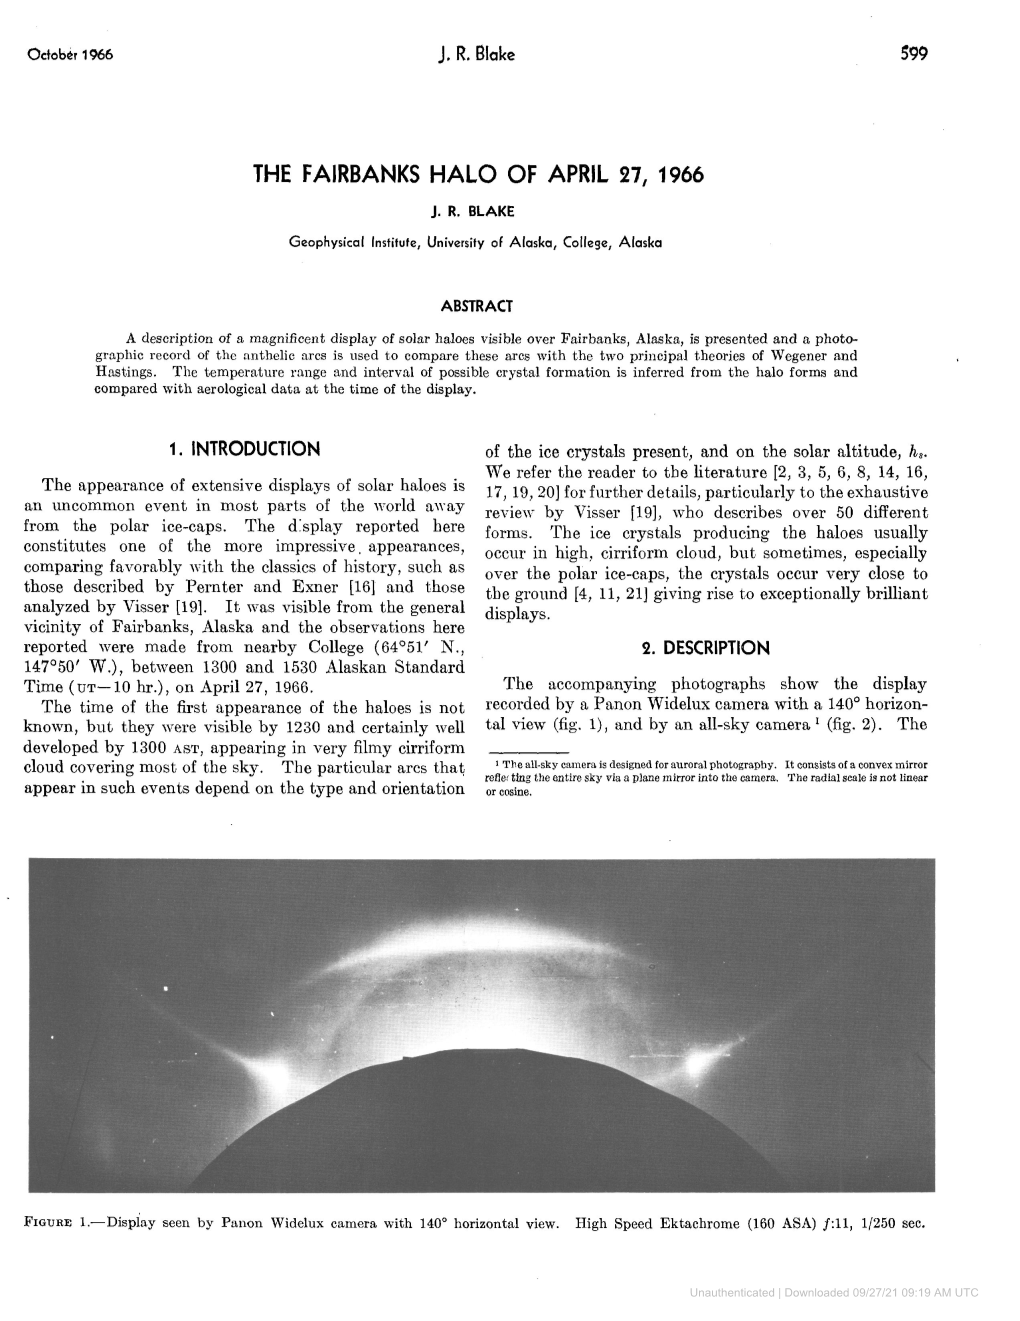 The Fairbanks Halo of April 27, 1966 J